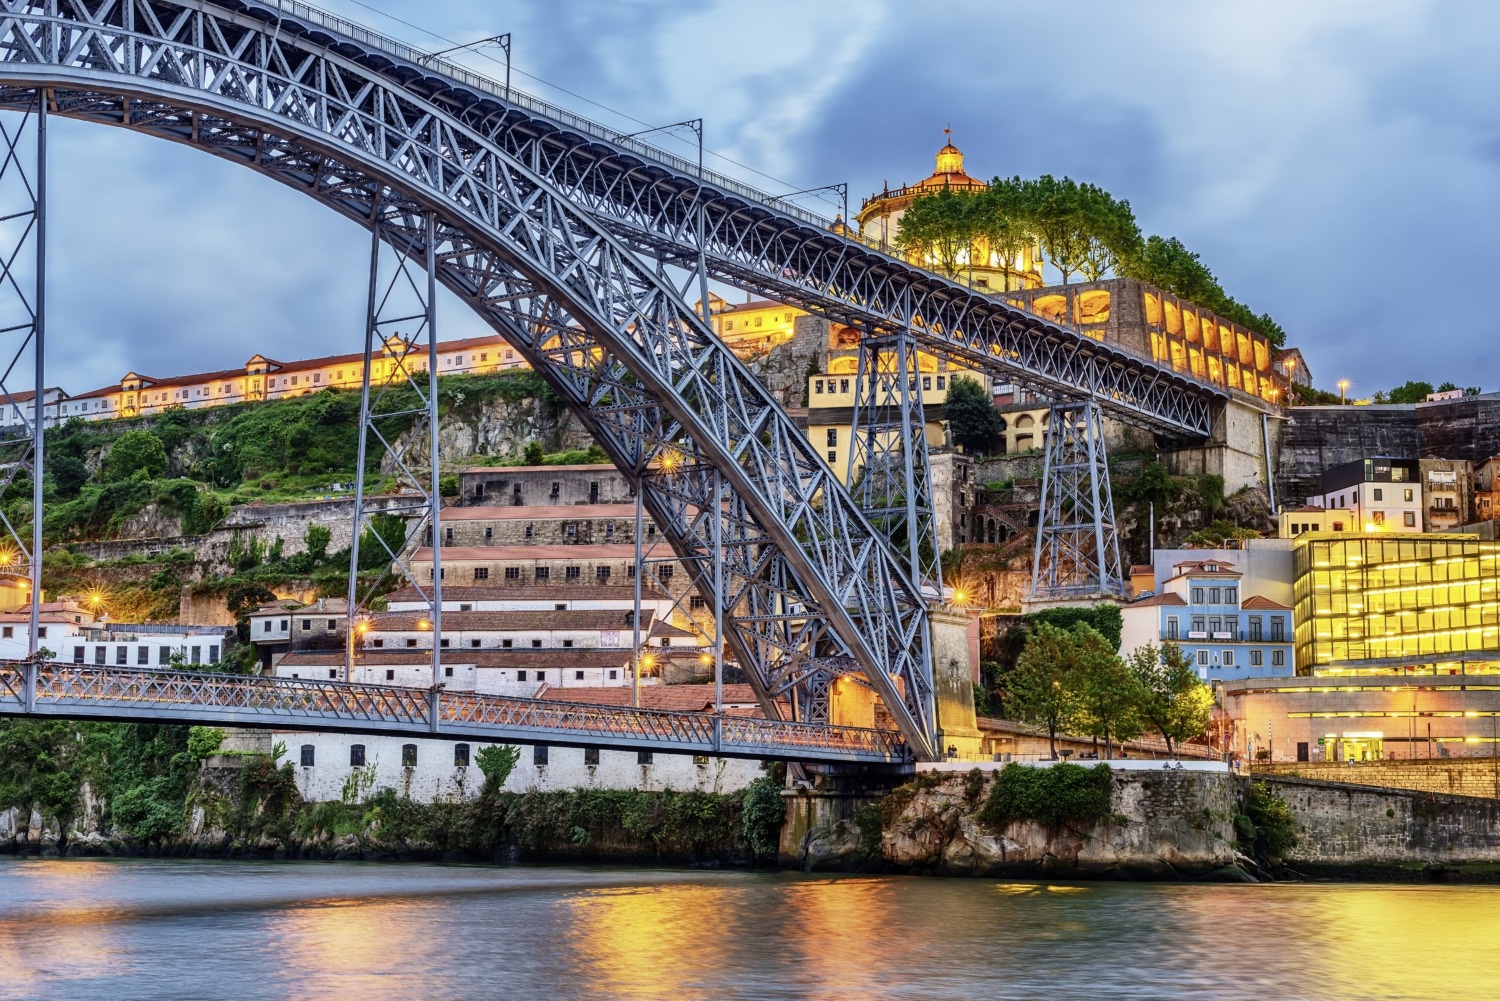 Premiere 2019: A-ROSA Schiff auf dem Douro in Portugal